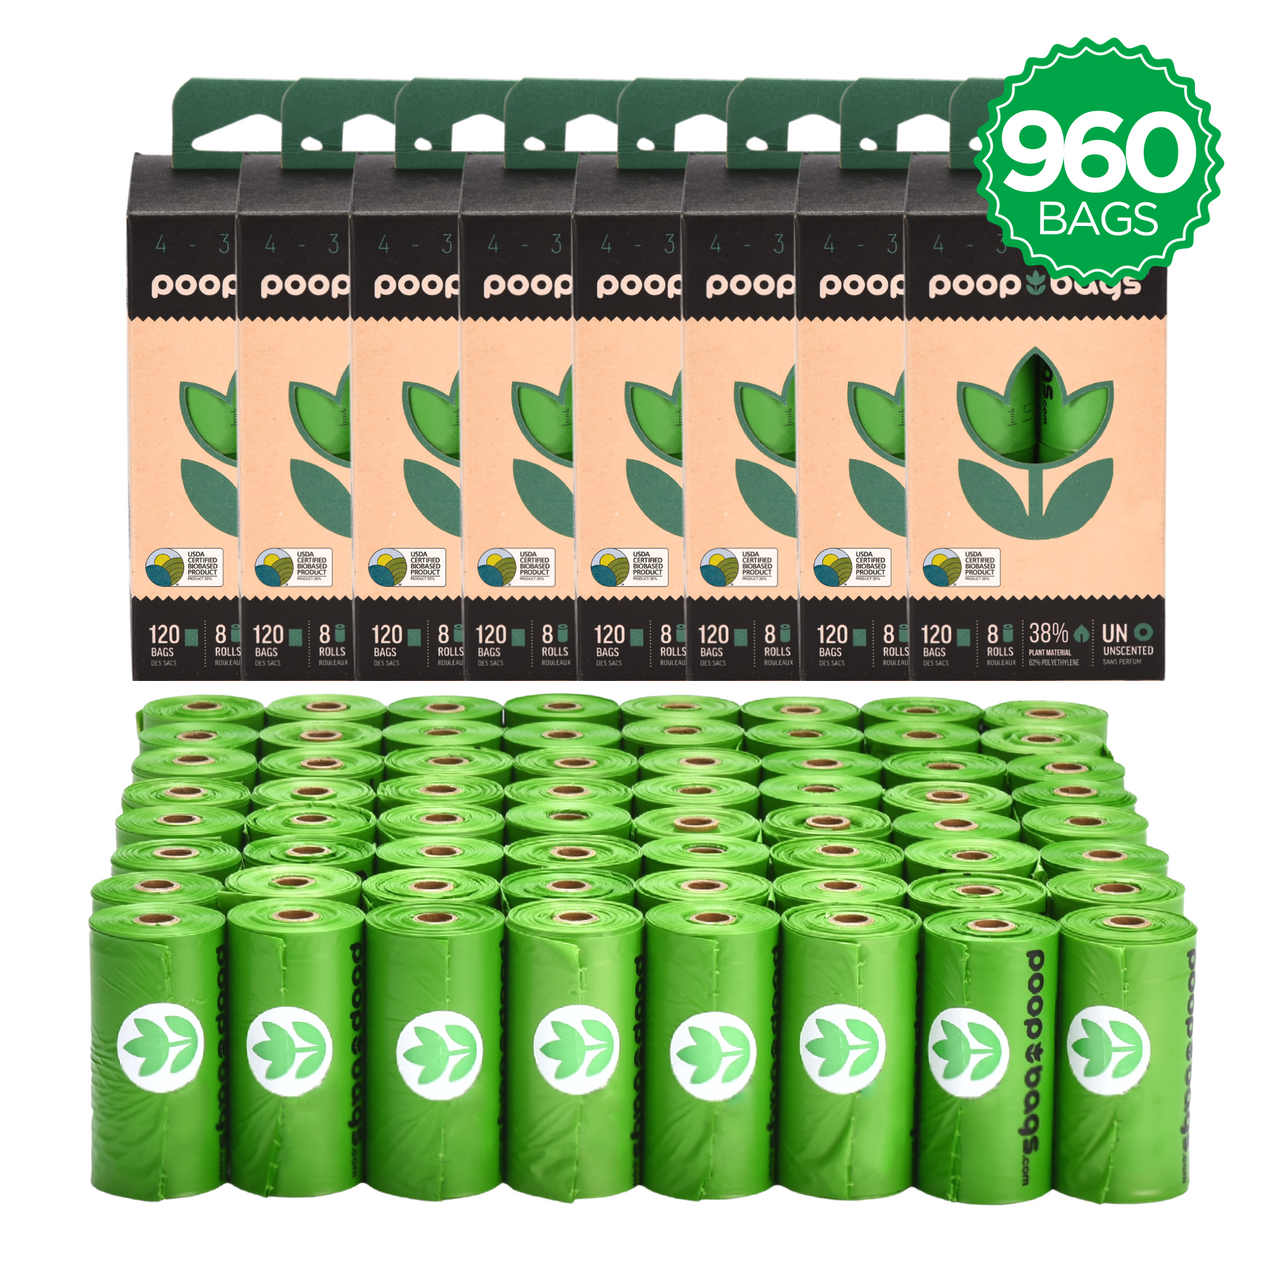  The Original Poop Bags® 960 Countdown Rolls®